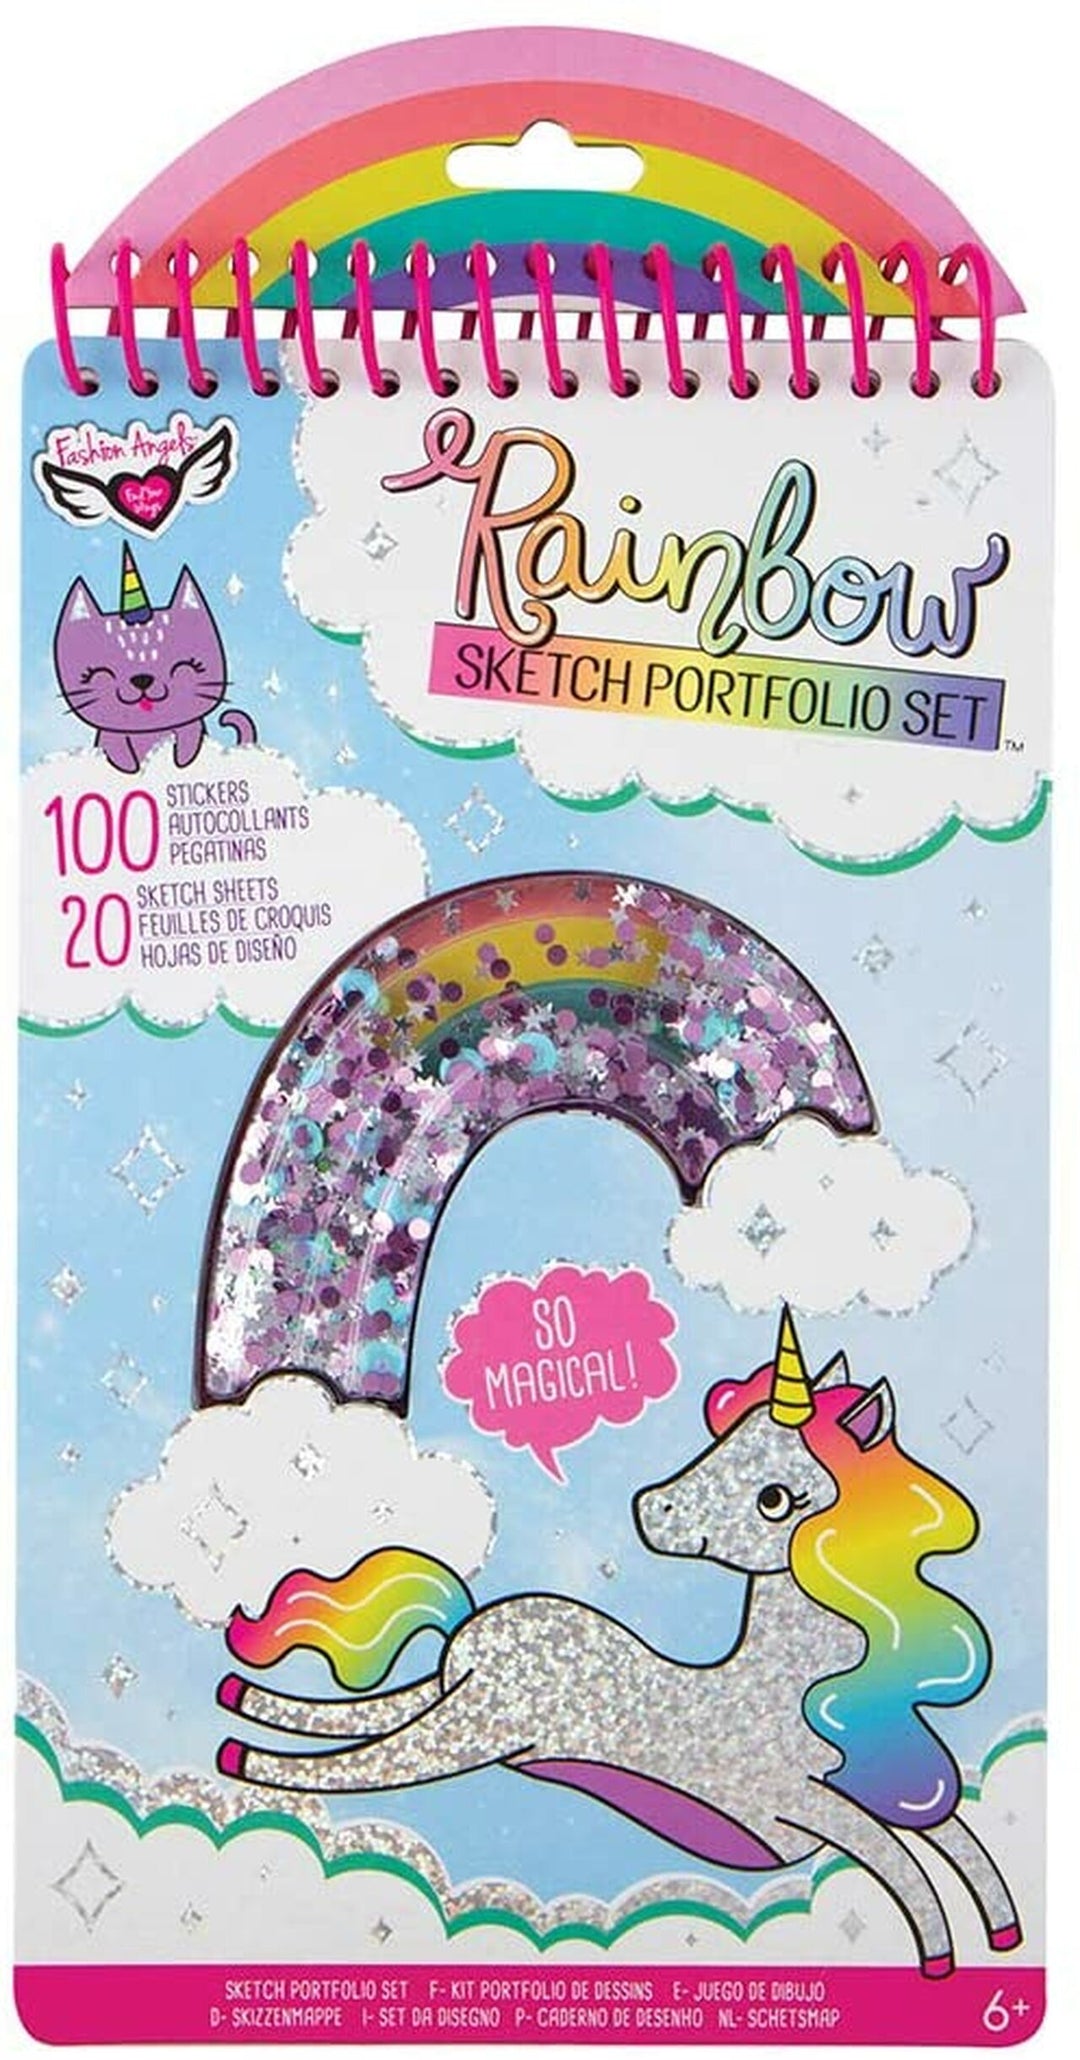 Rainbow Sketch Compact Portfolio